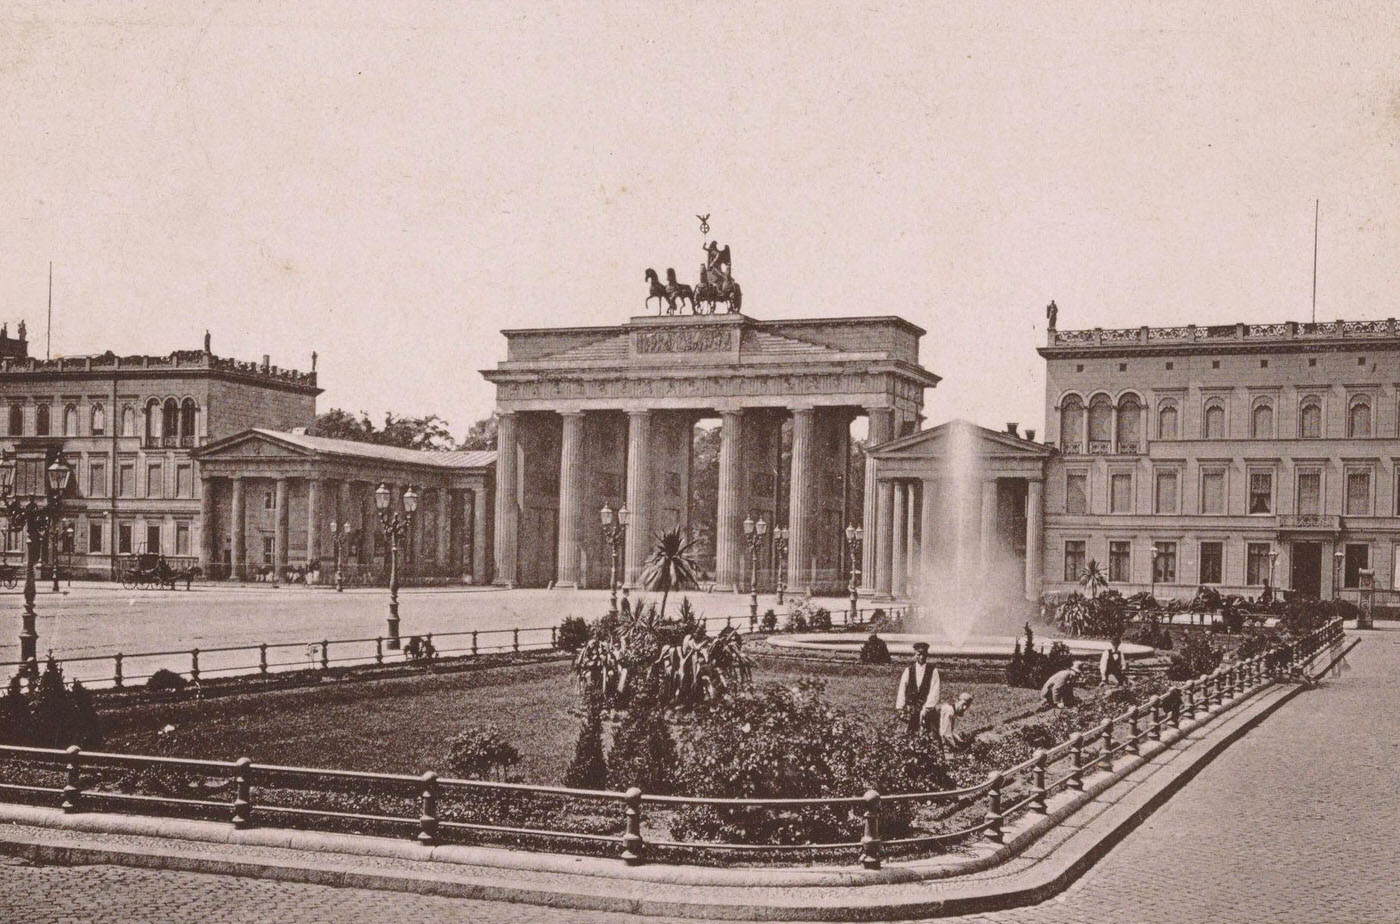 View of the Brandenburg Gate in Berlin, 1891